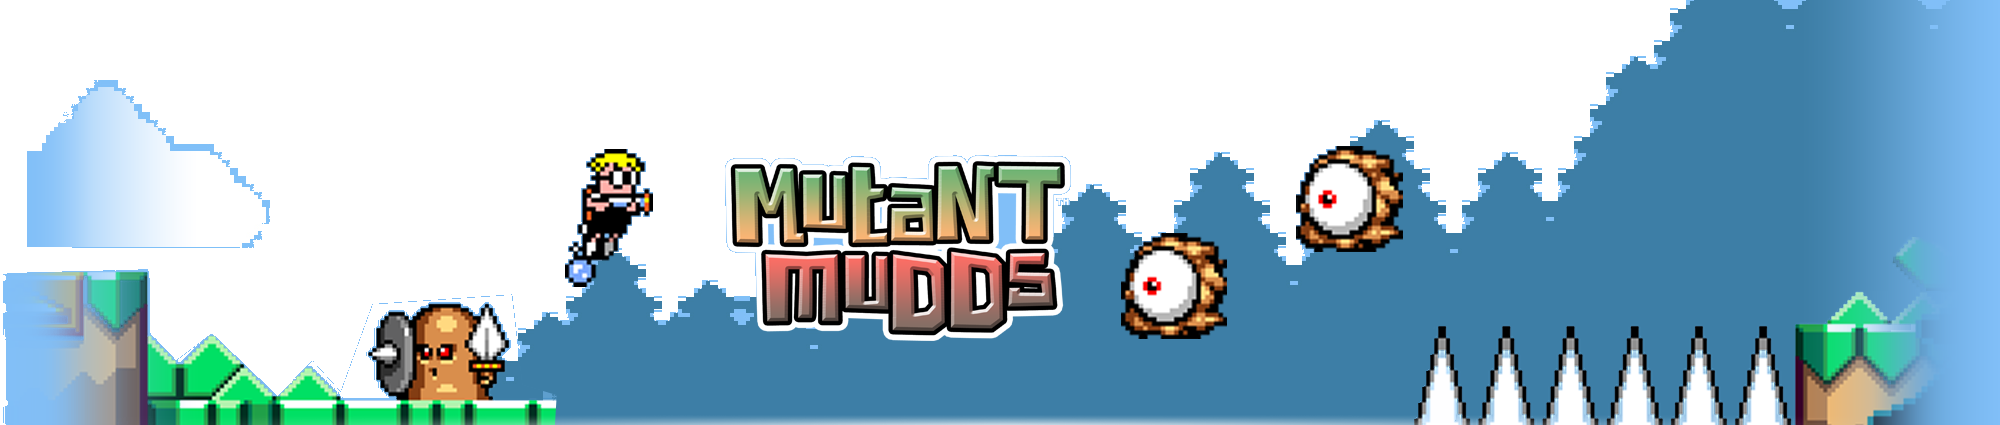 Banner Mutant Mudds